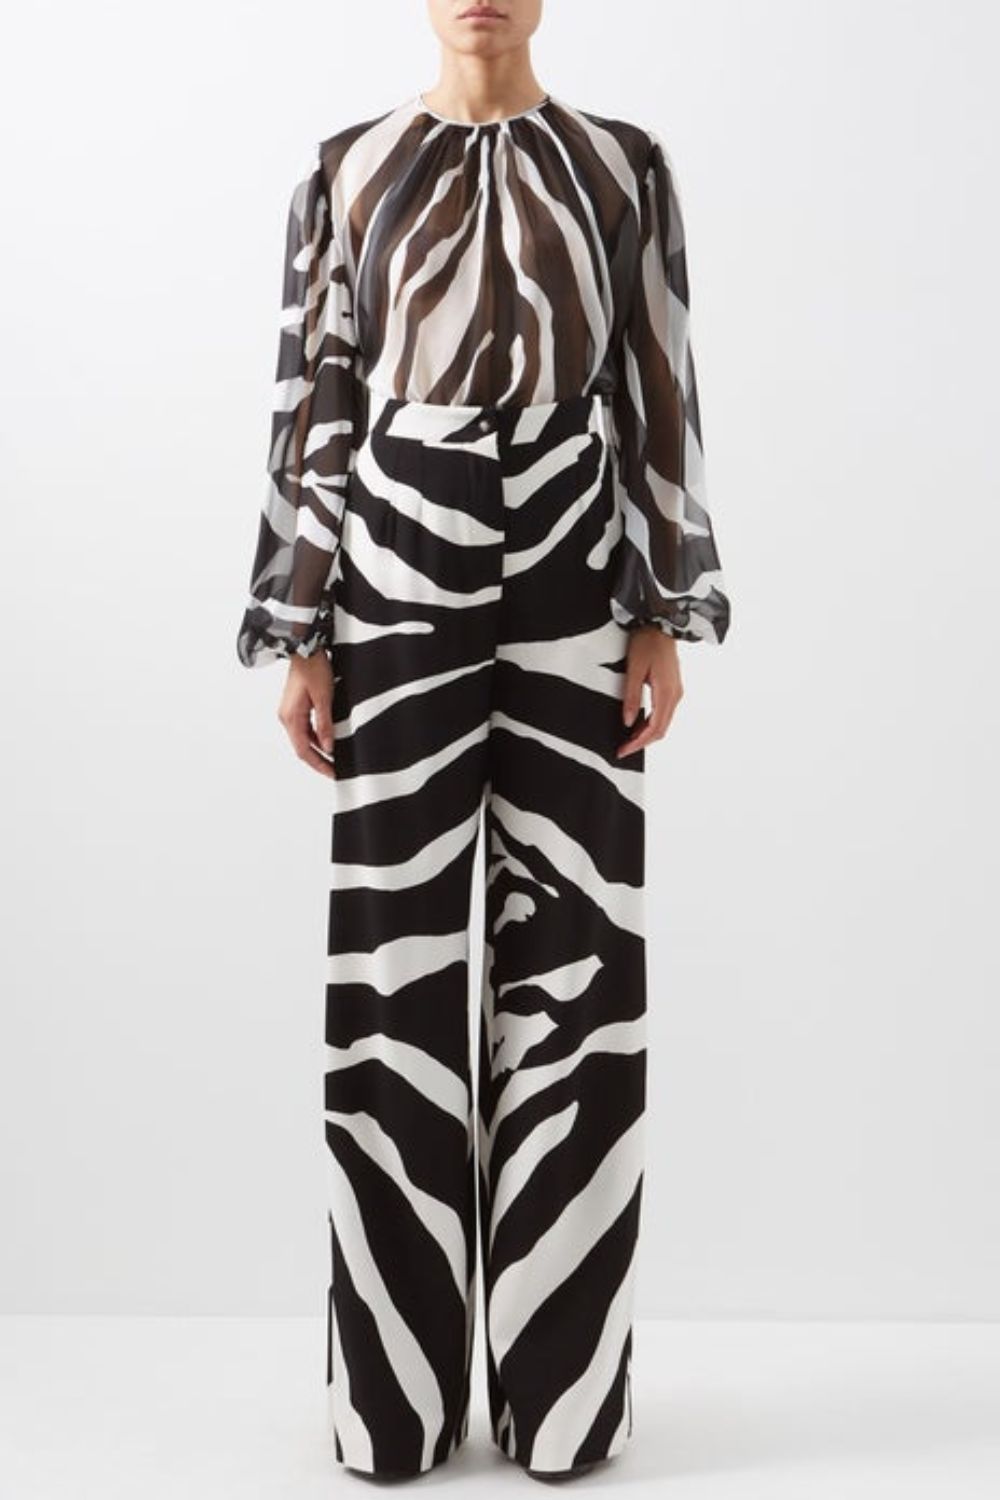 The-Gloss-Magazine-how-to-wear-the-zebra-print-trend-5